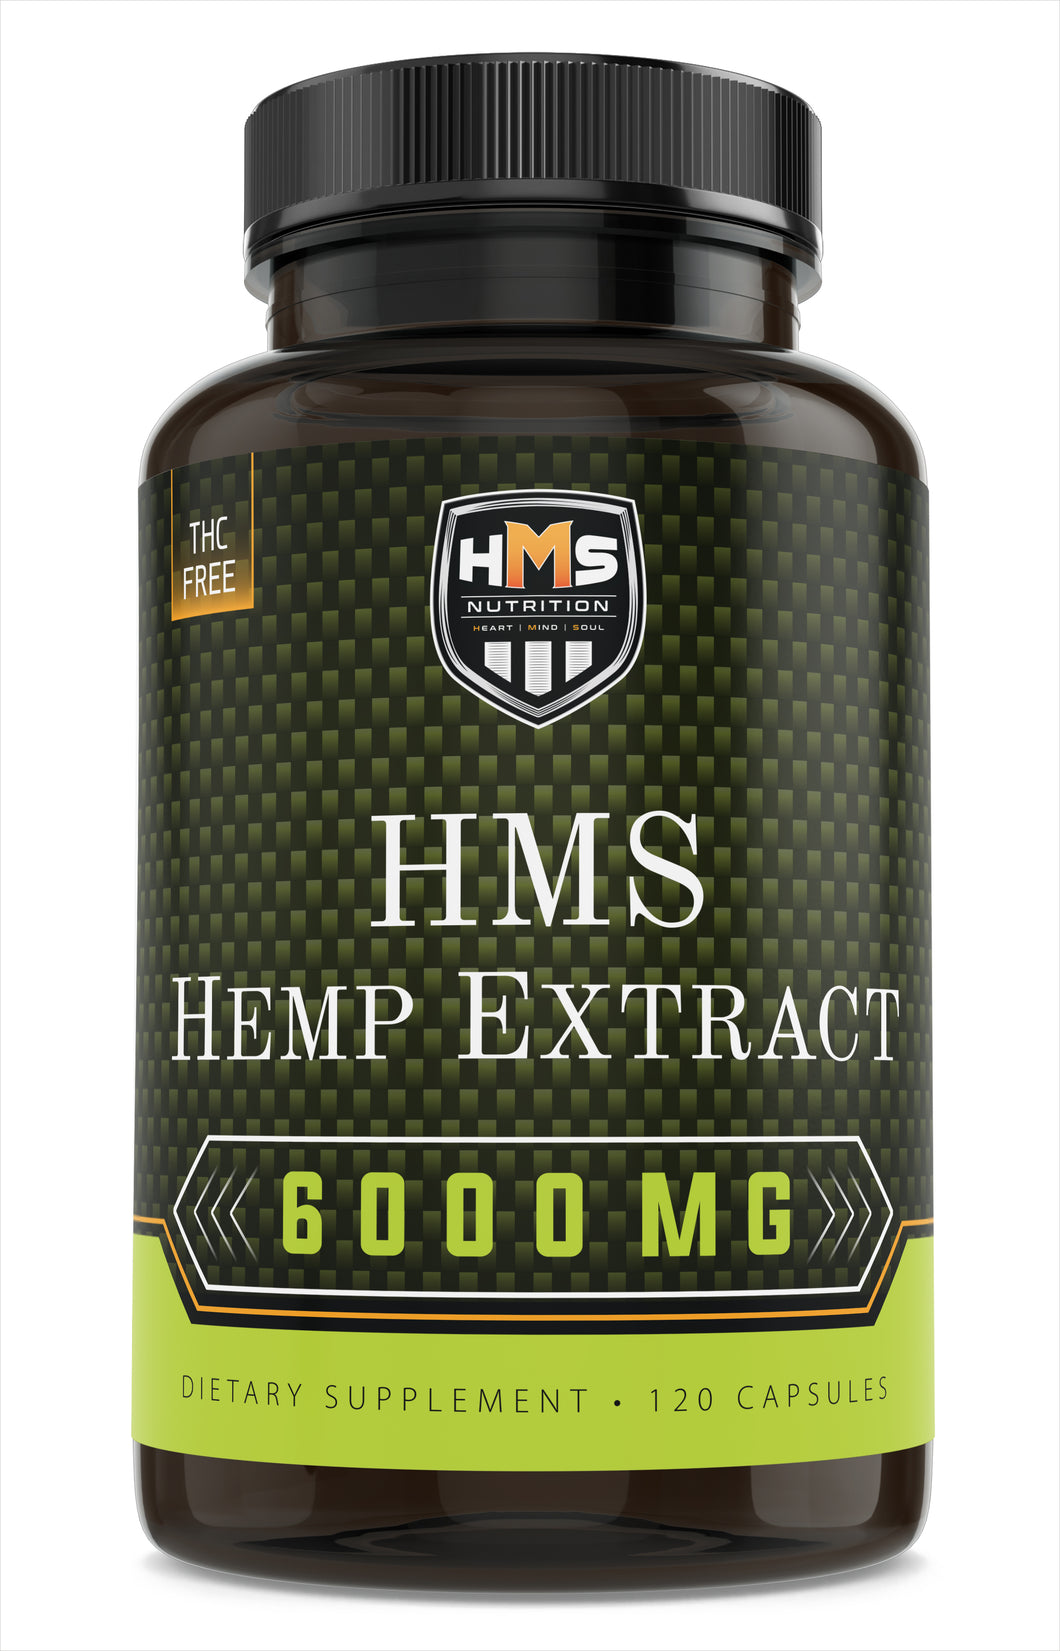 Hemp Extract Supplement - 6000mg